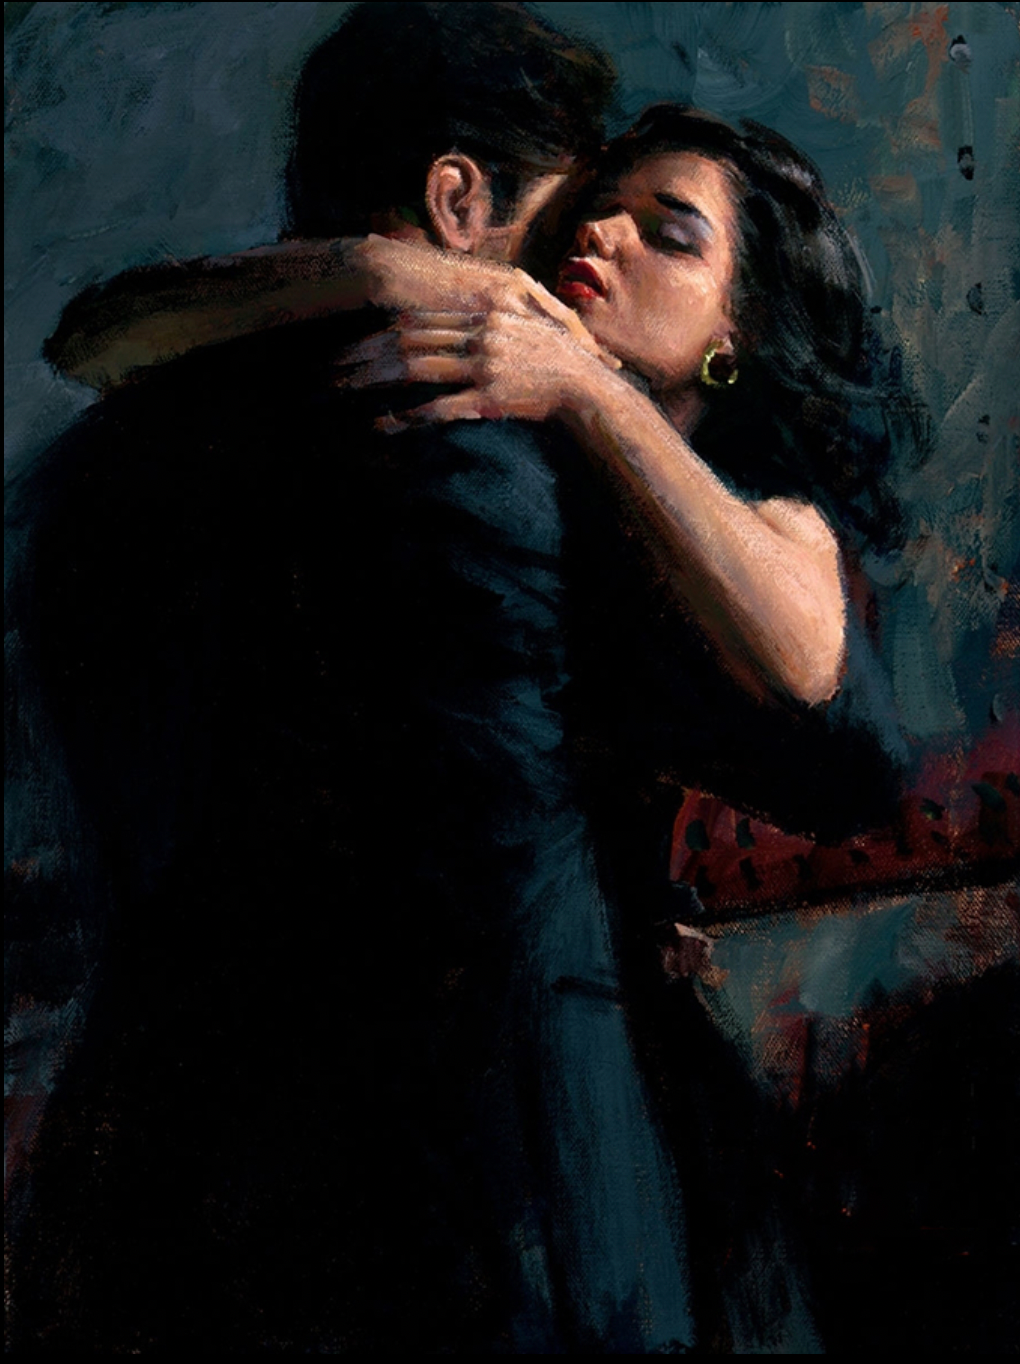 The Embrace III by Fabian Perez